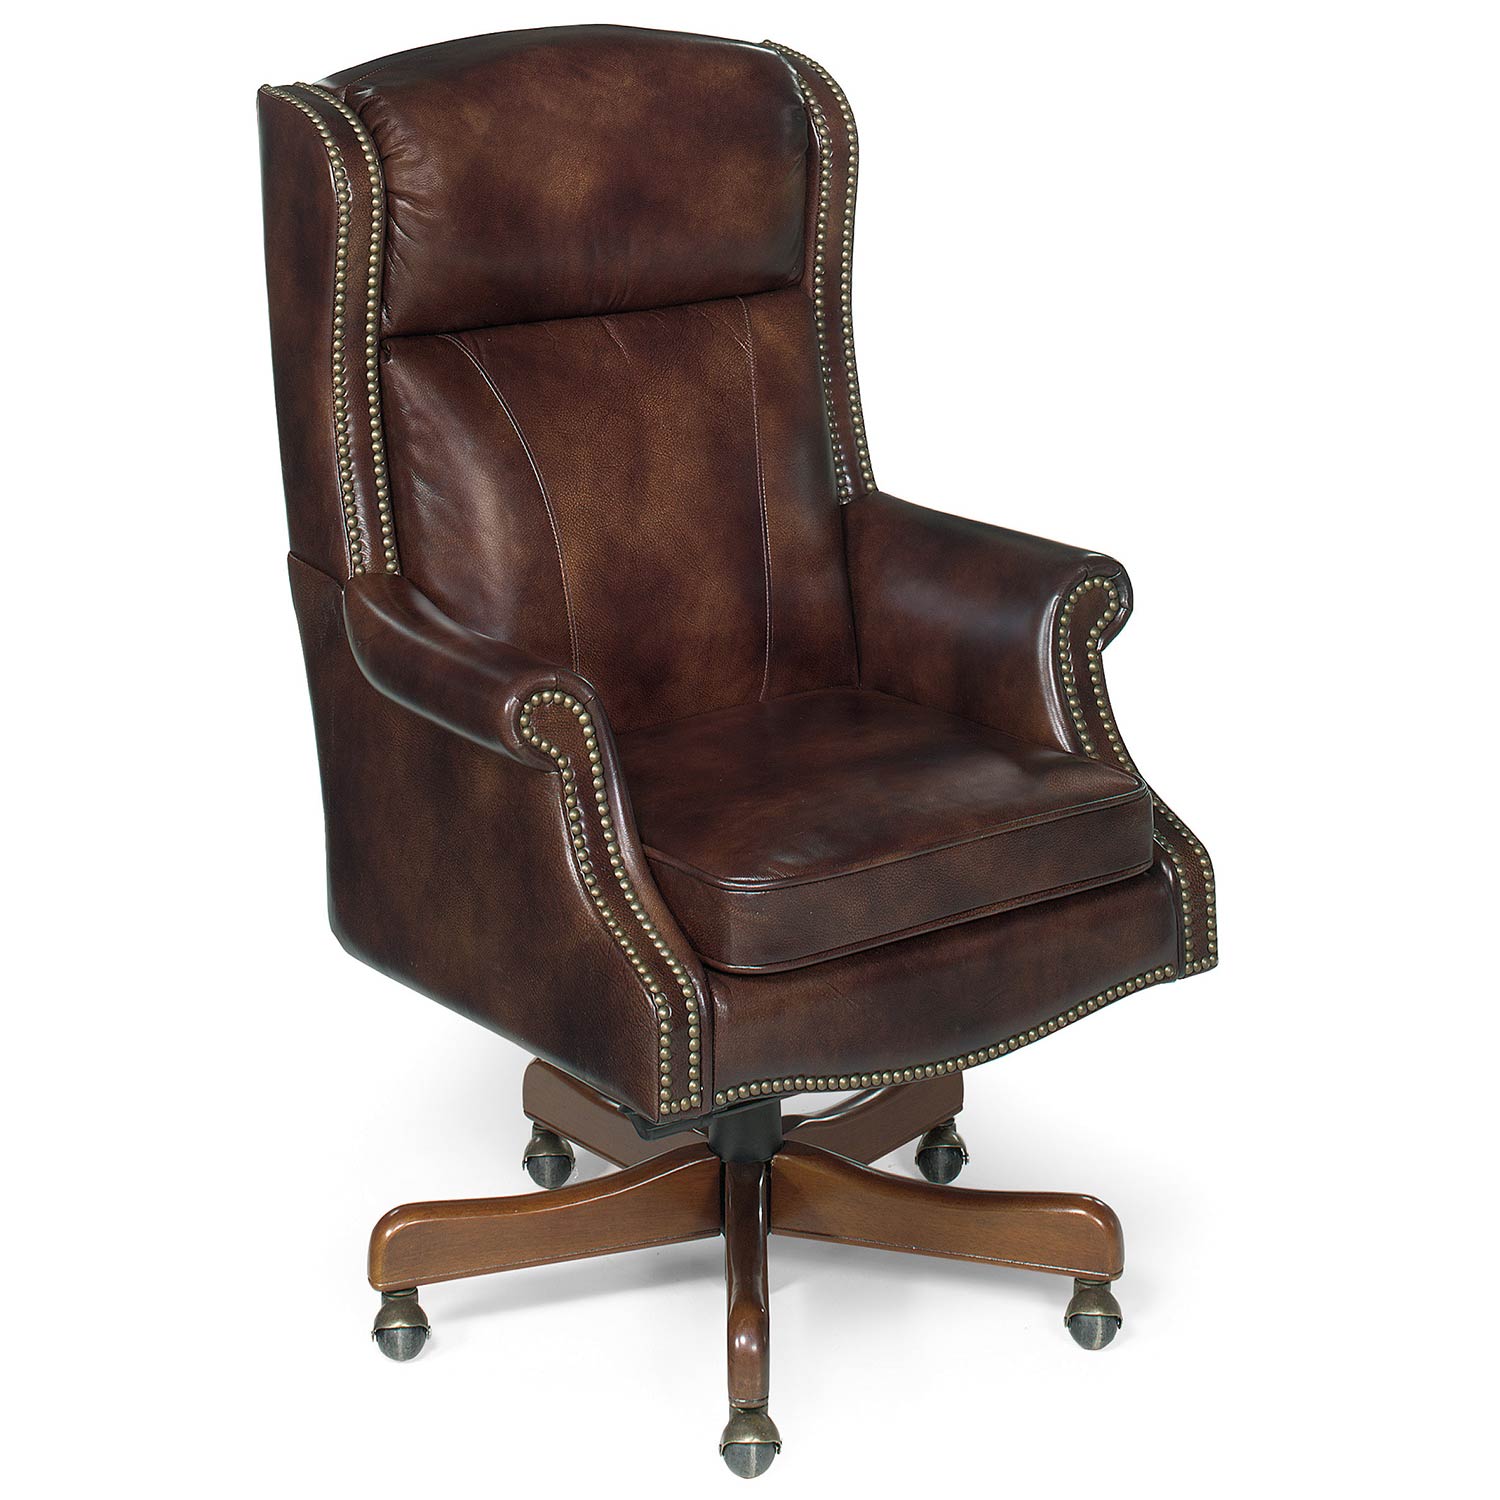 Hooker Furniture Merlin Executive Swivel Tilt Chair